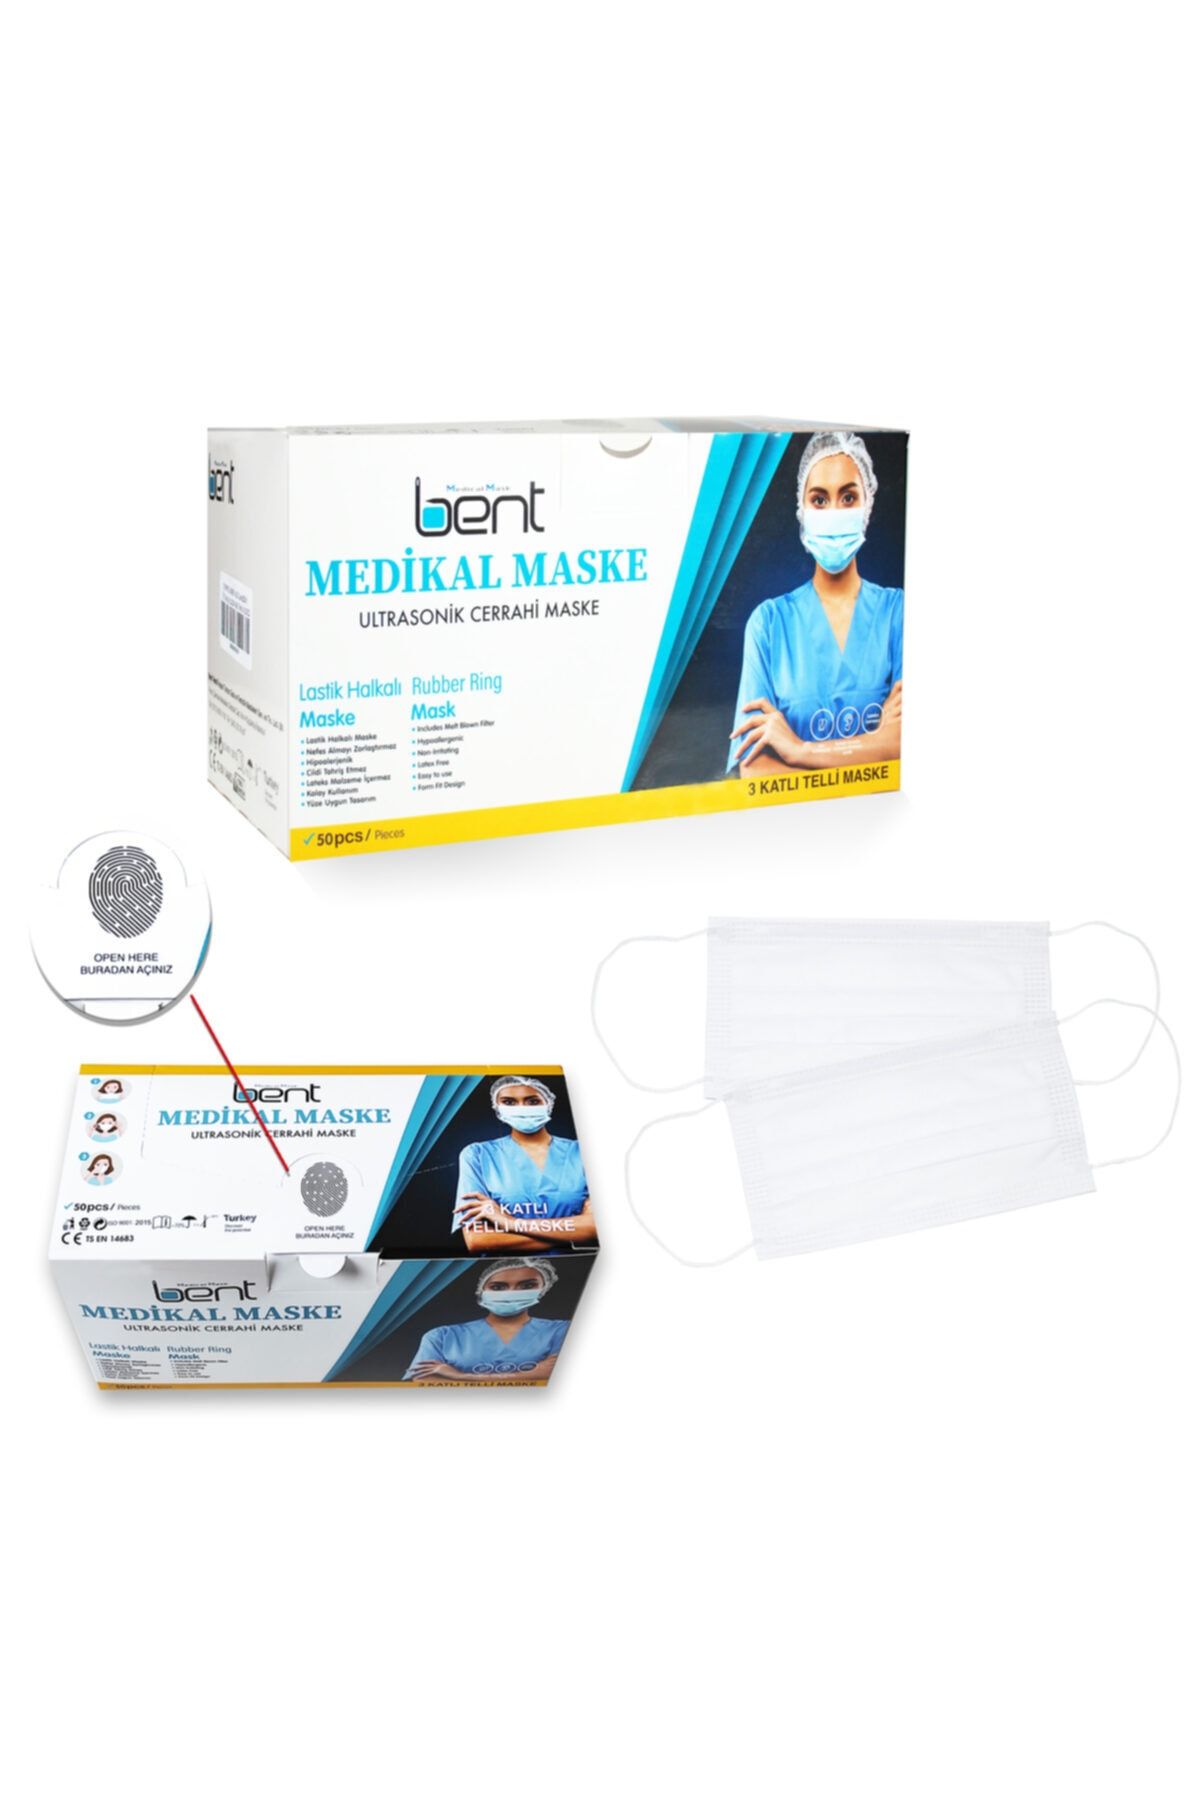 Bent Medical Mask 3 Katlı Spounbond Filtreli Burun Telli Cerrahi Mavi Maske 100'lü Set Yumuşak Lastik Halkalı Maske